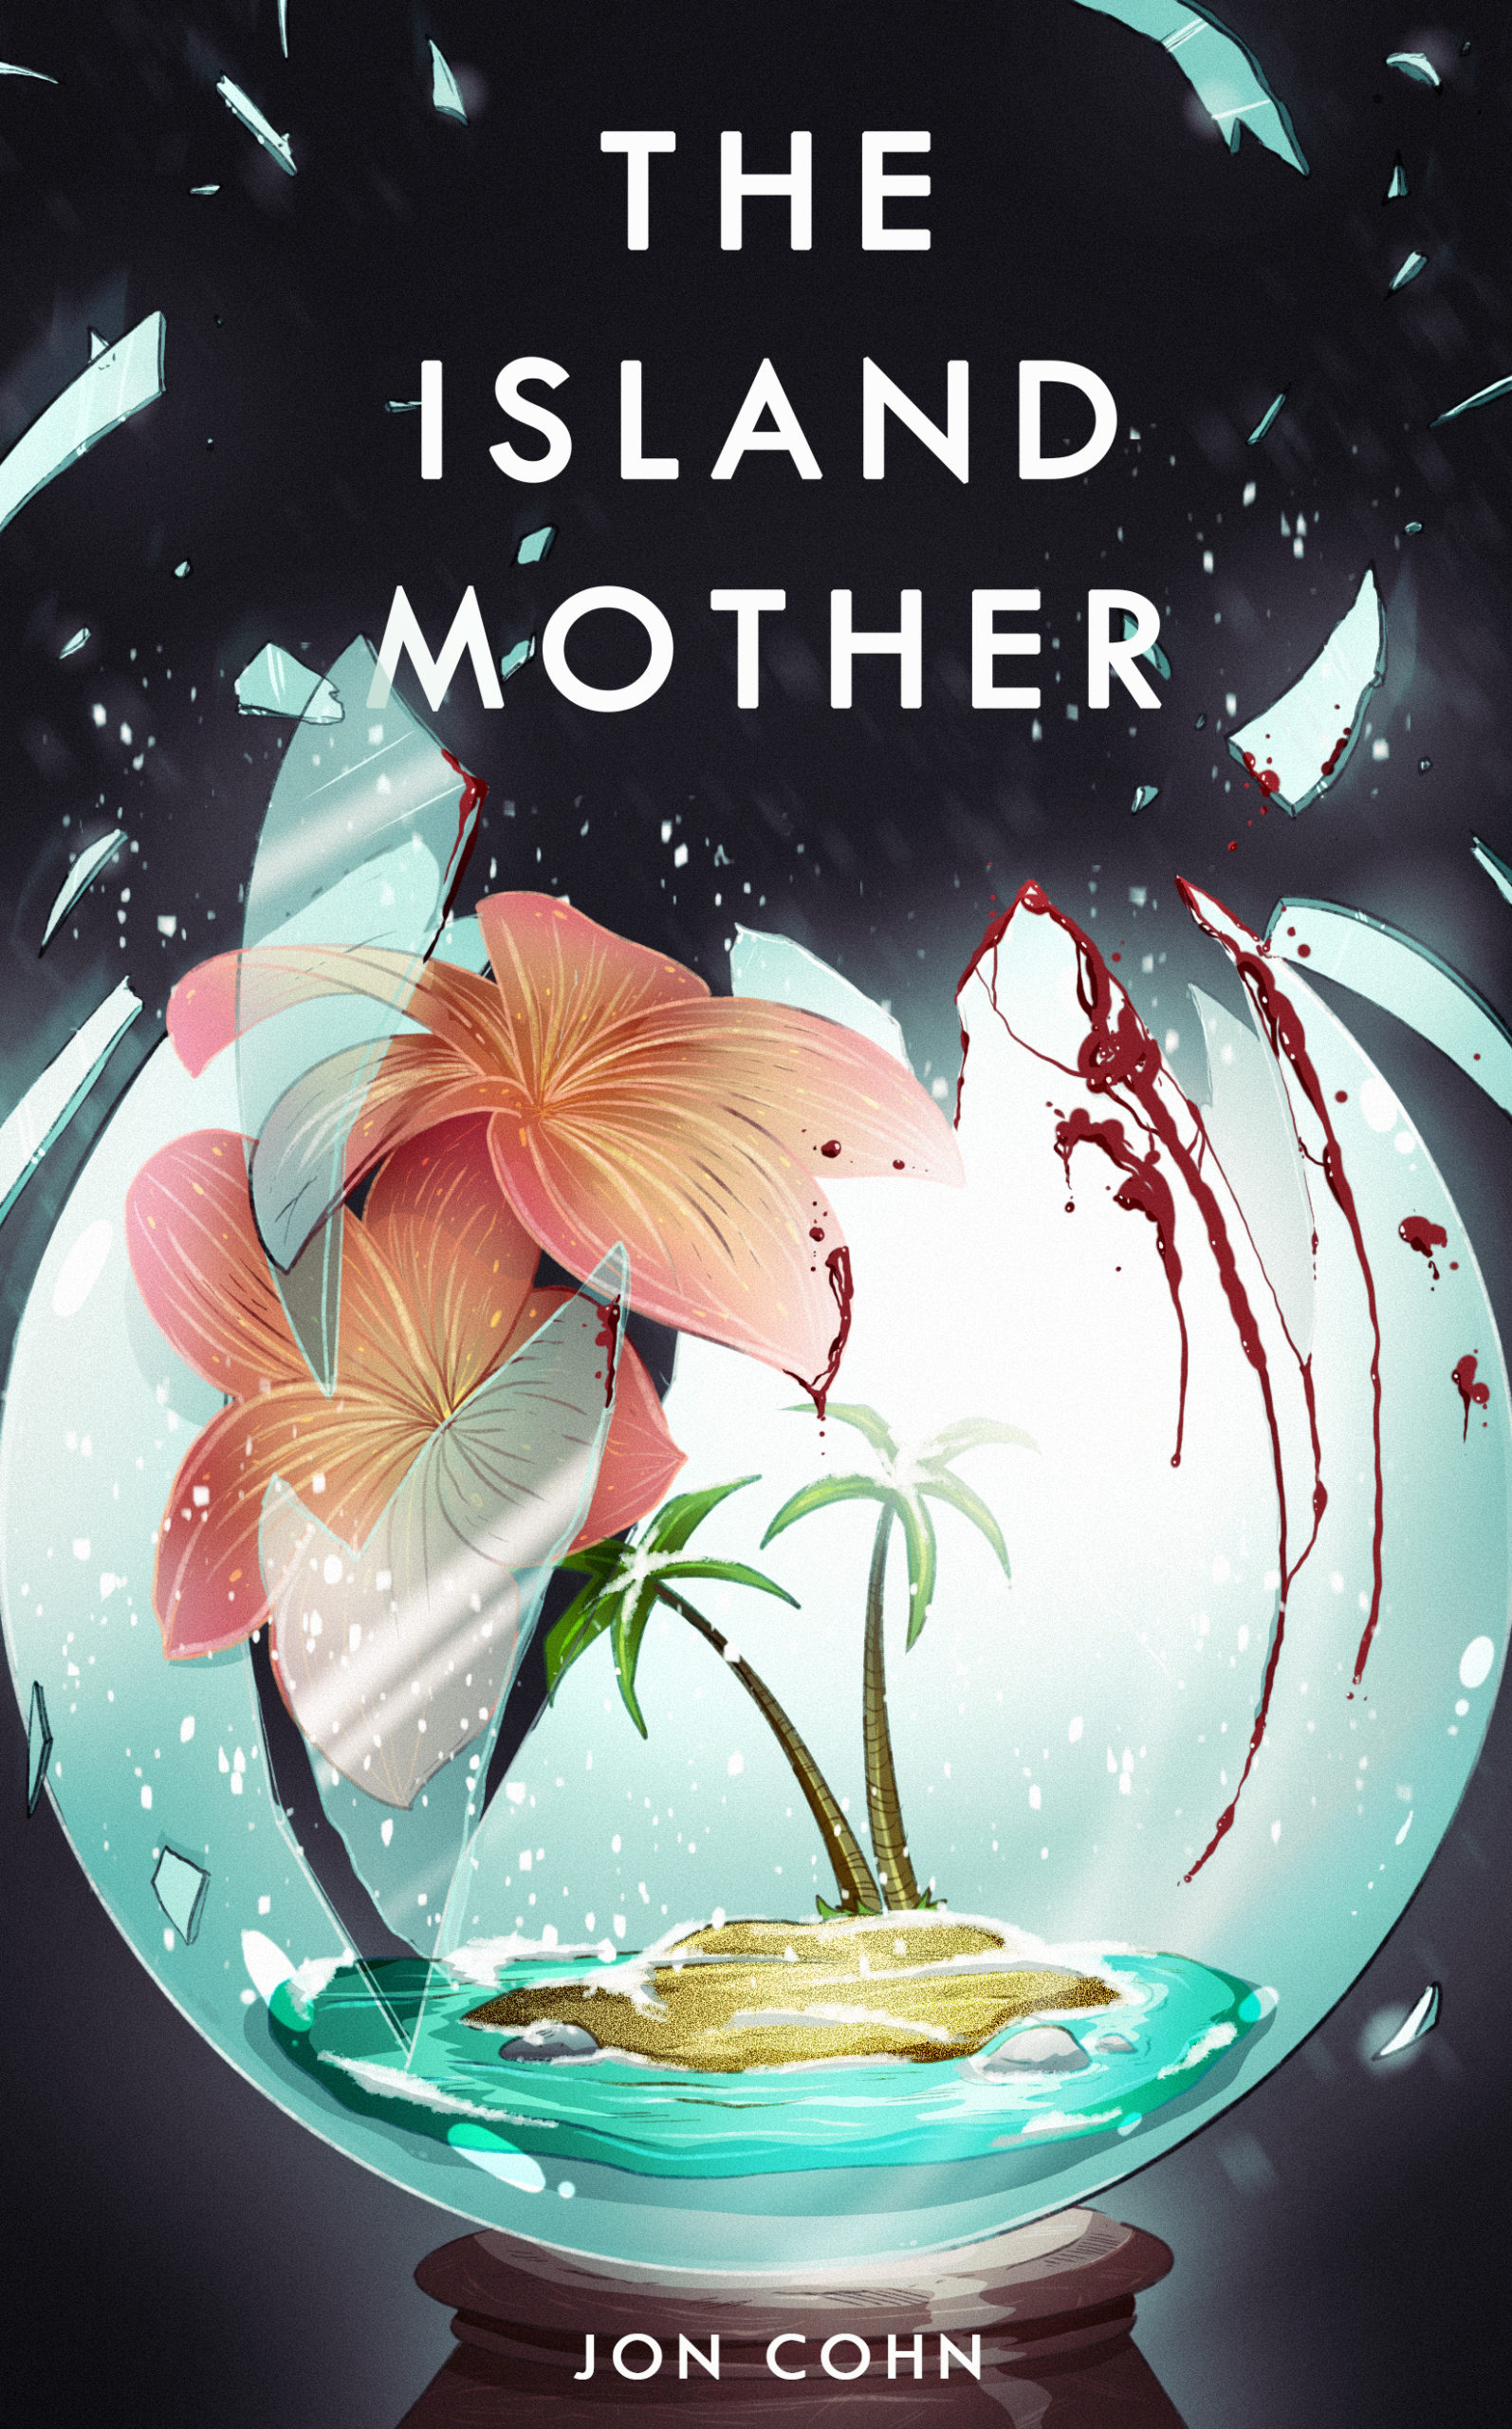 The Island Mother by Jon Cohn